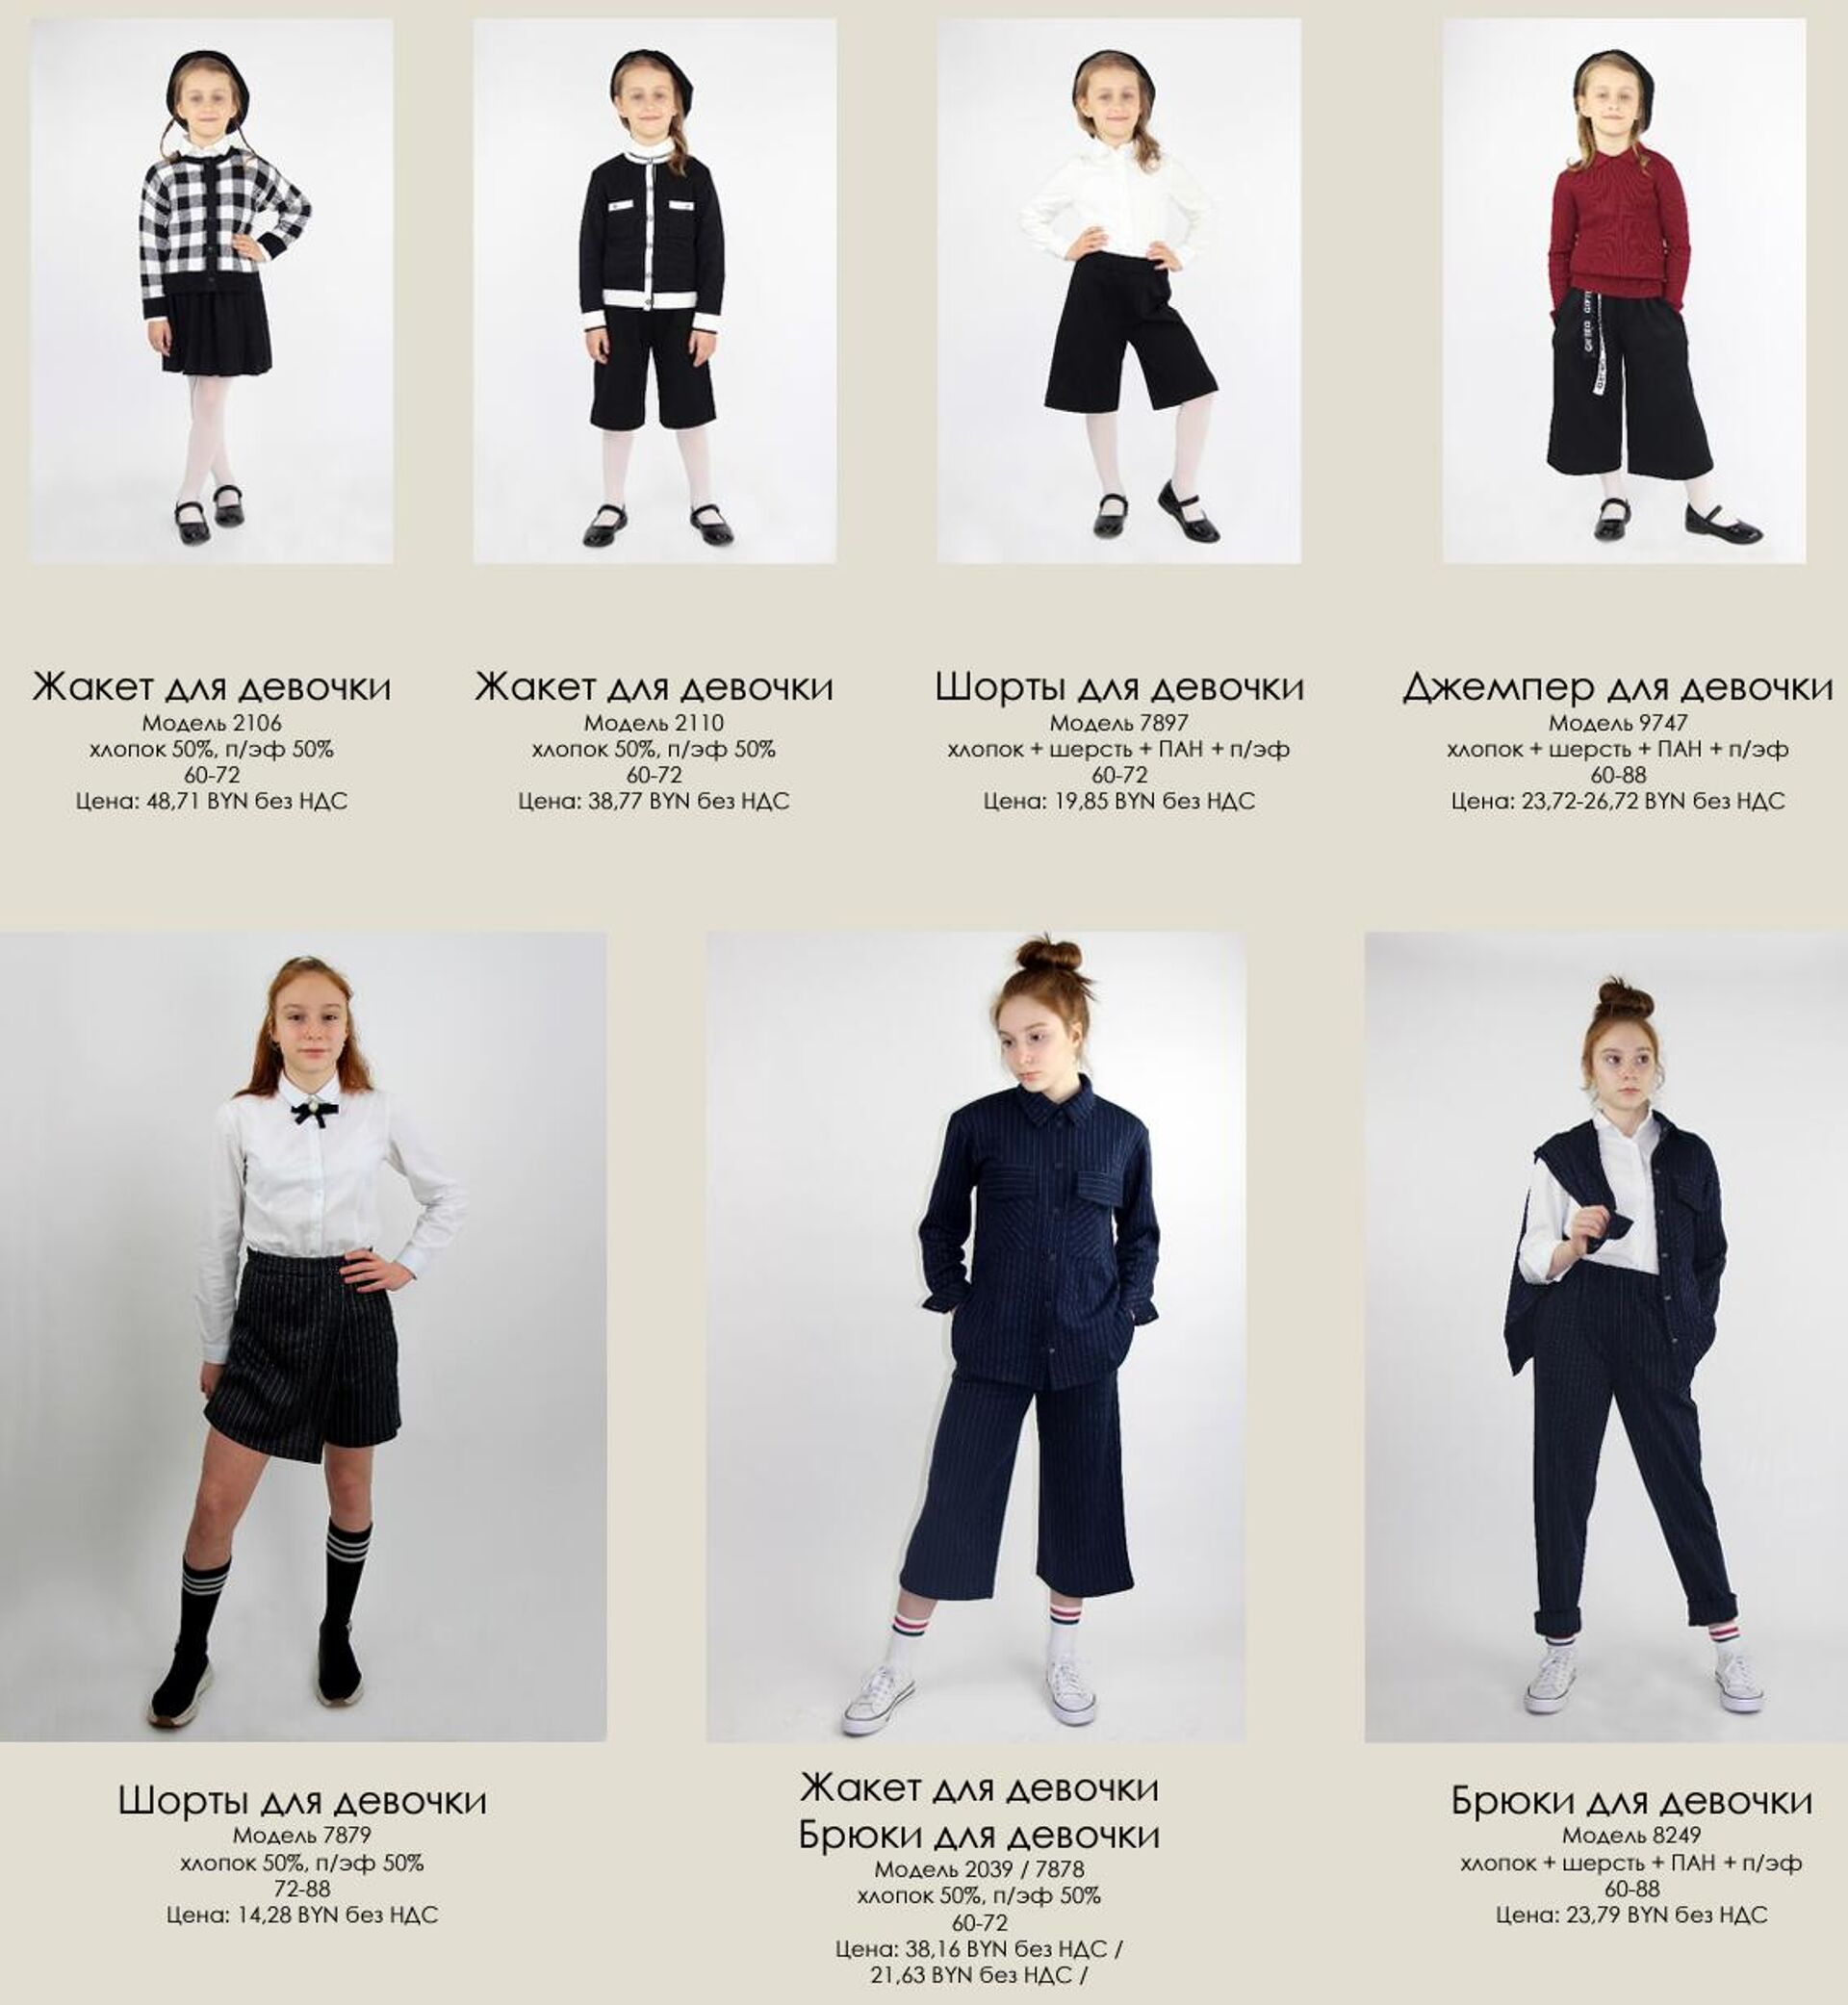 Avaro – интернет-магазин женской одежды из Беларуси